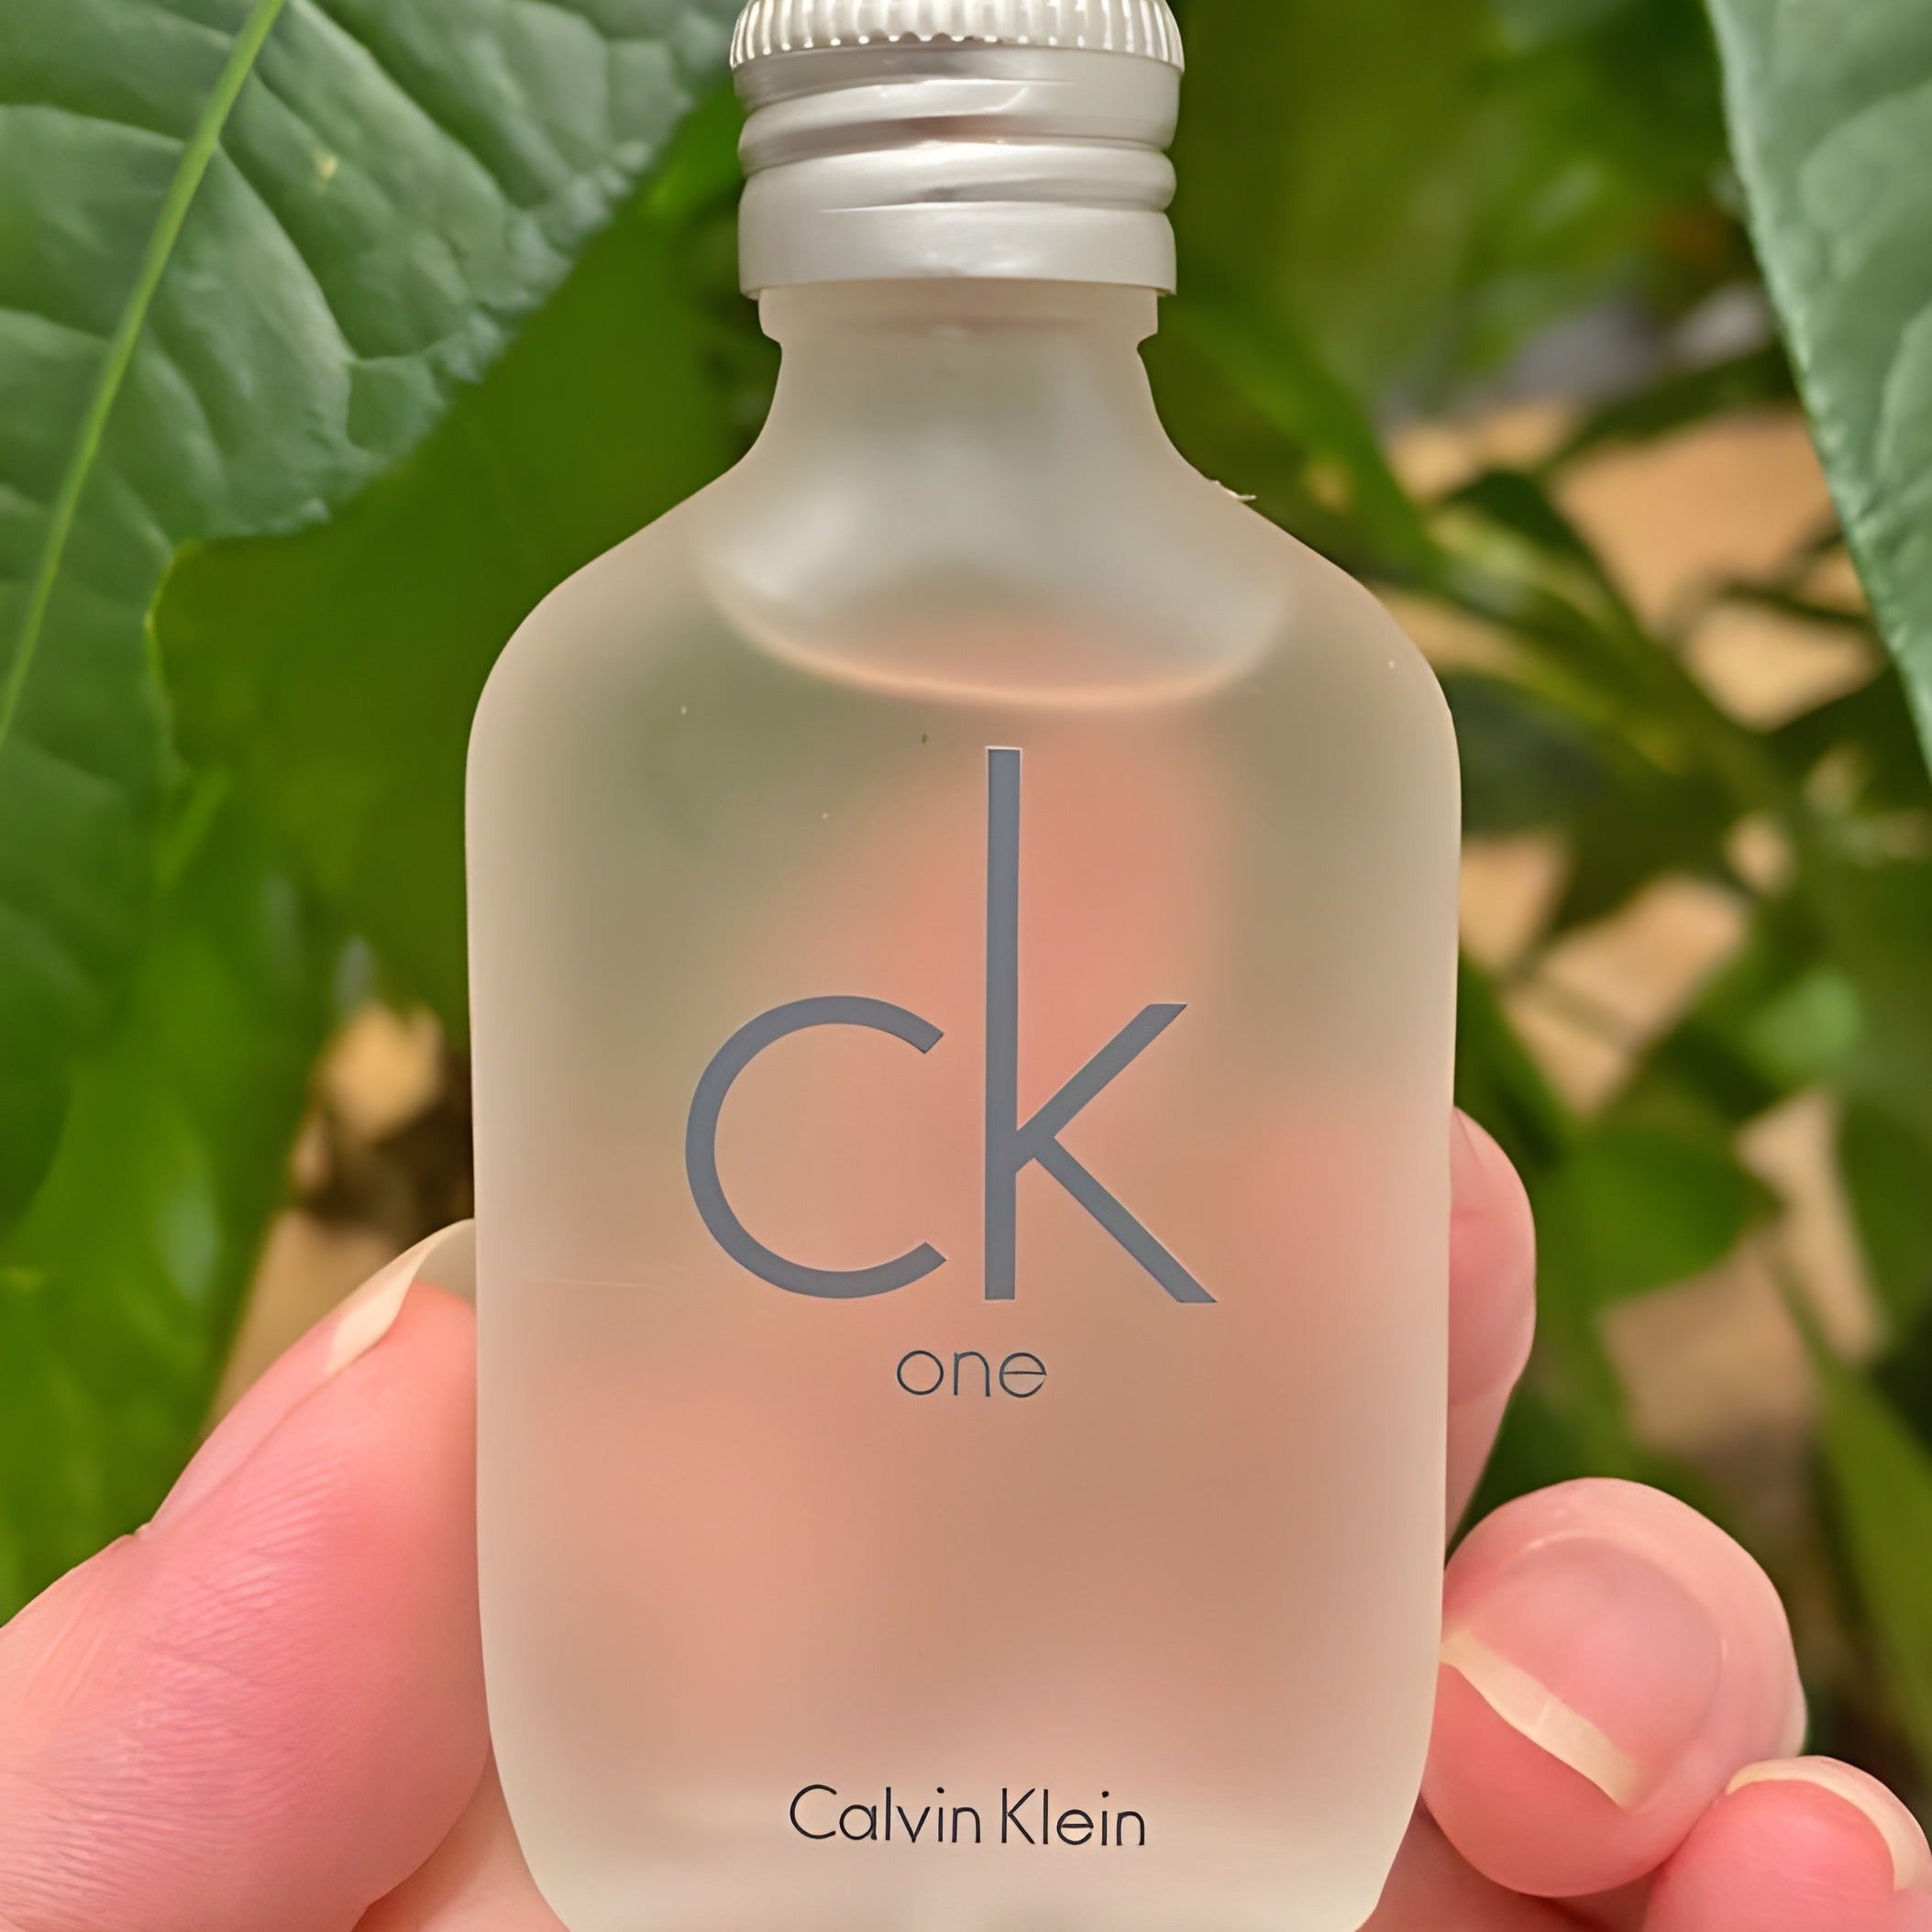 Calvin Klein CK One Travel Set | My Perfume Shop Australia